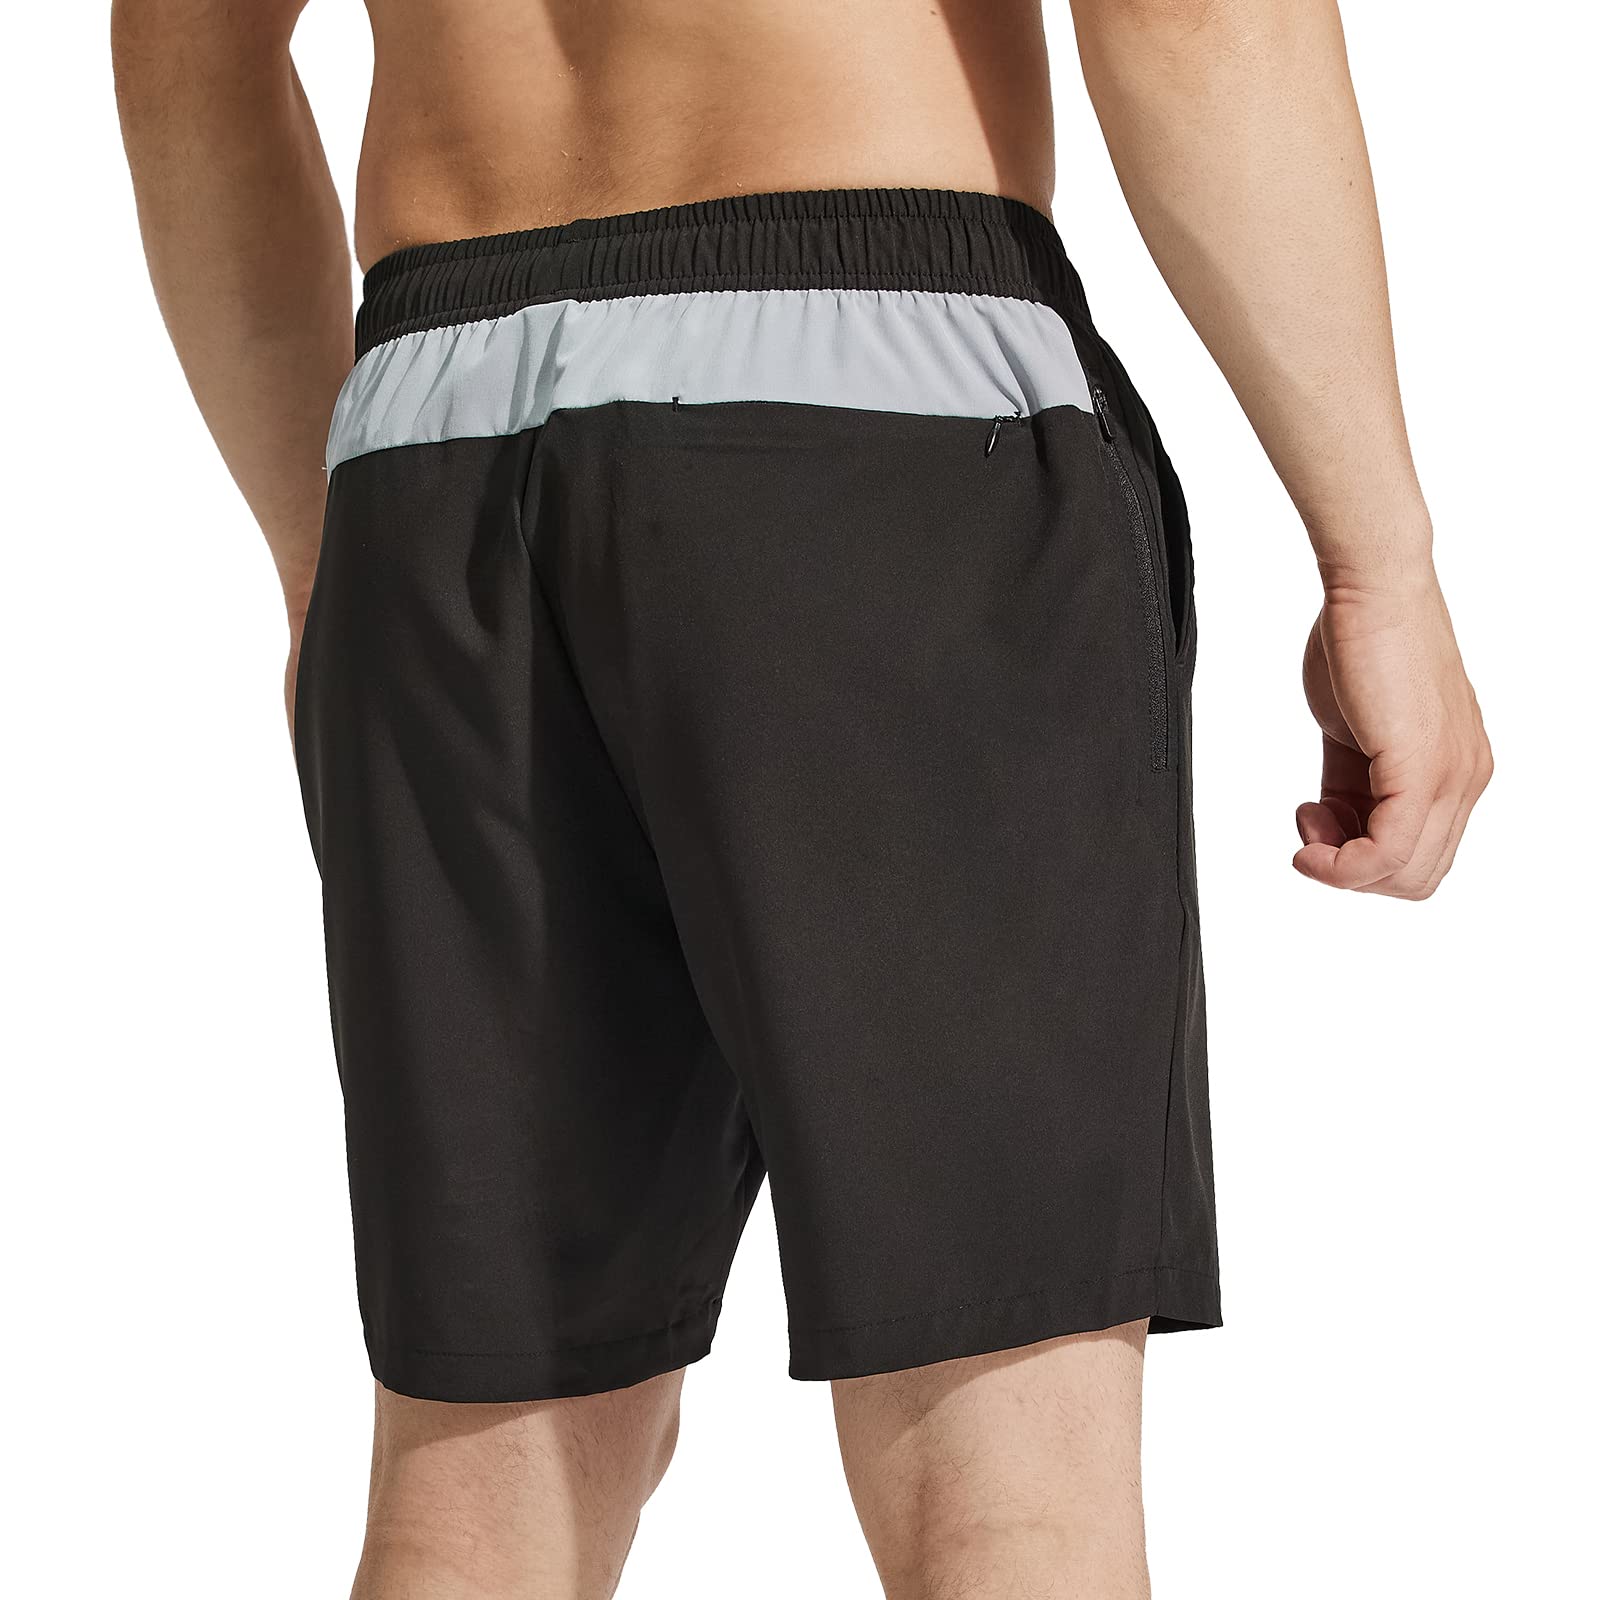 Men Quick-Dry Running Shorts with Zipper Pockets 7 Inch Men's Shorts Black Gray / S MIER